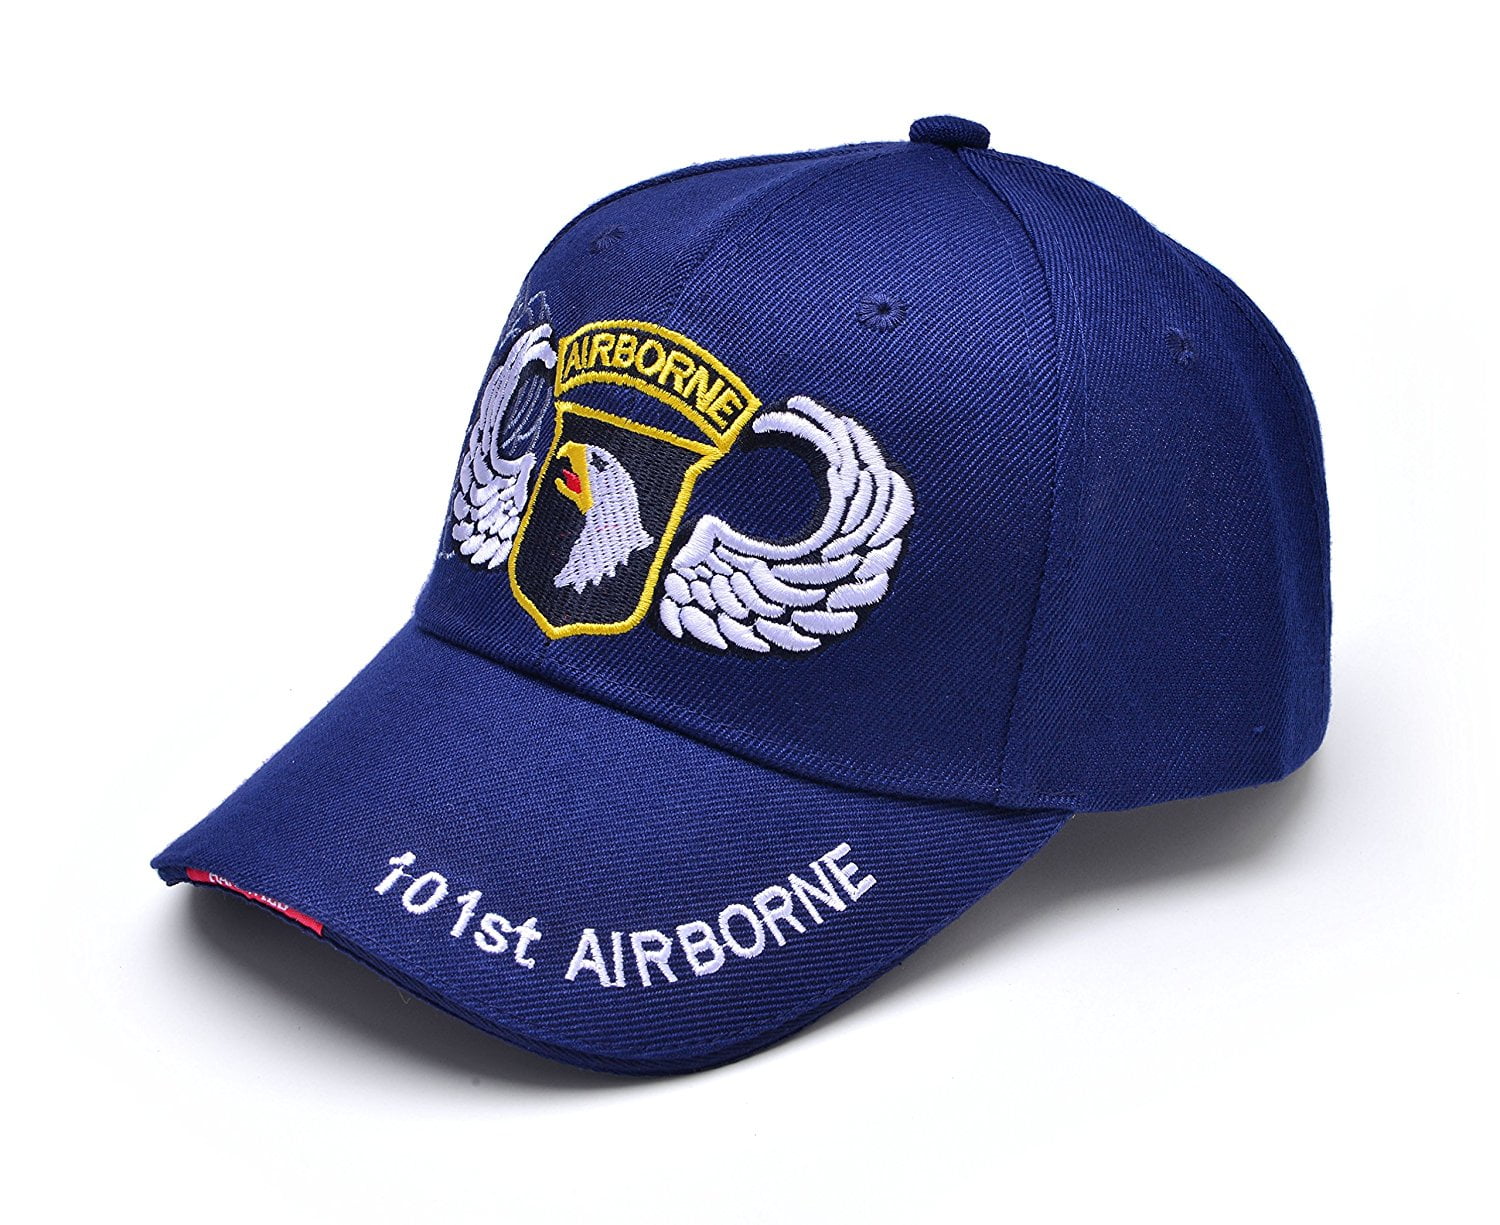 US Army 101st Airborne Division Vietnam Service Combat Veteran Men&Women Warm Winter Knit Plain Beanie Hat Skull Cap Acrylic Knit Cuff Hat